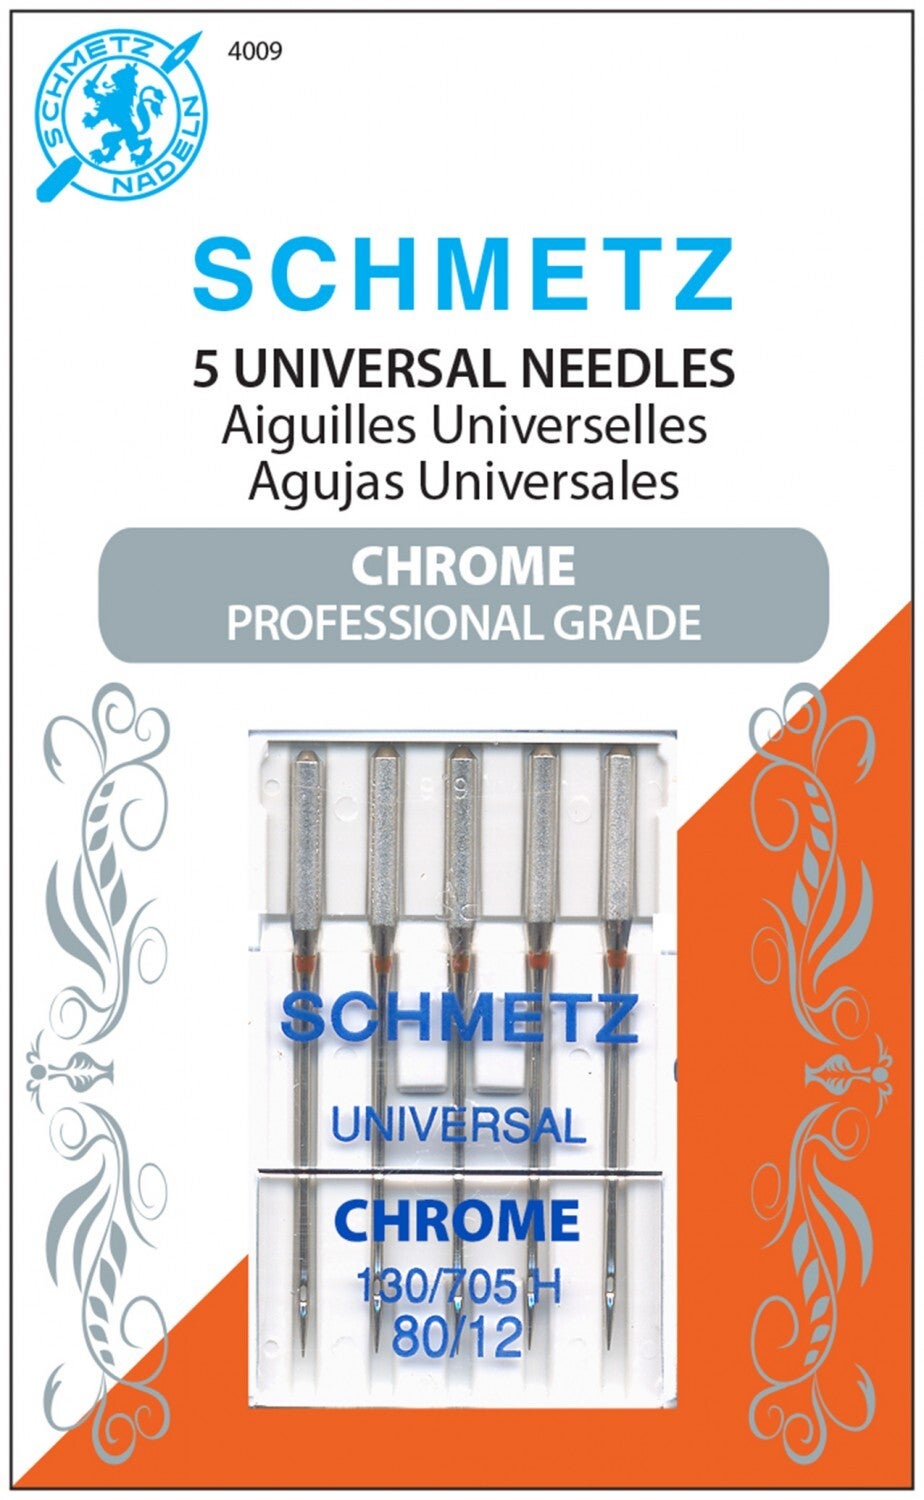 Schmetz 5 Chrome Universal Needles - Juki Junkies